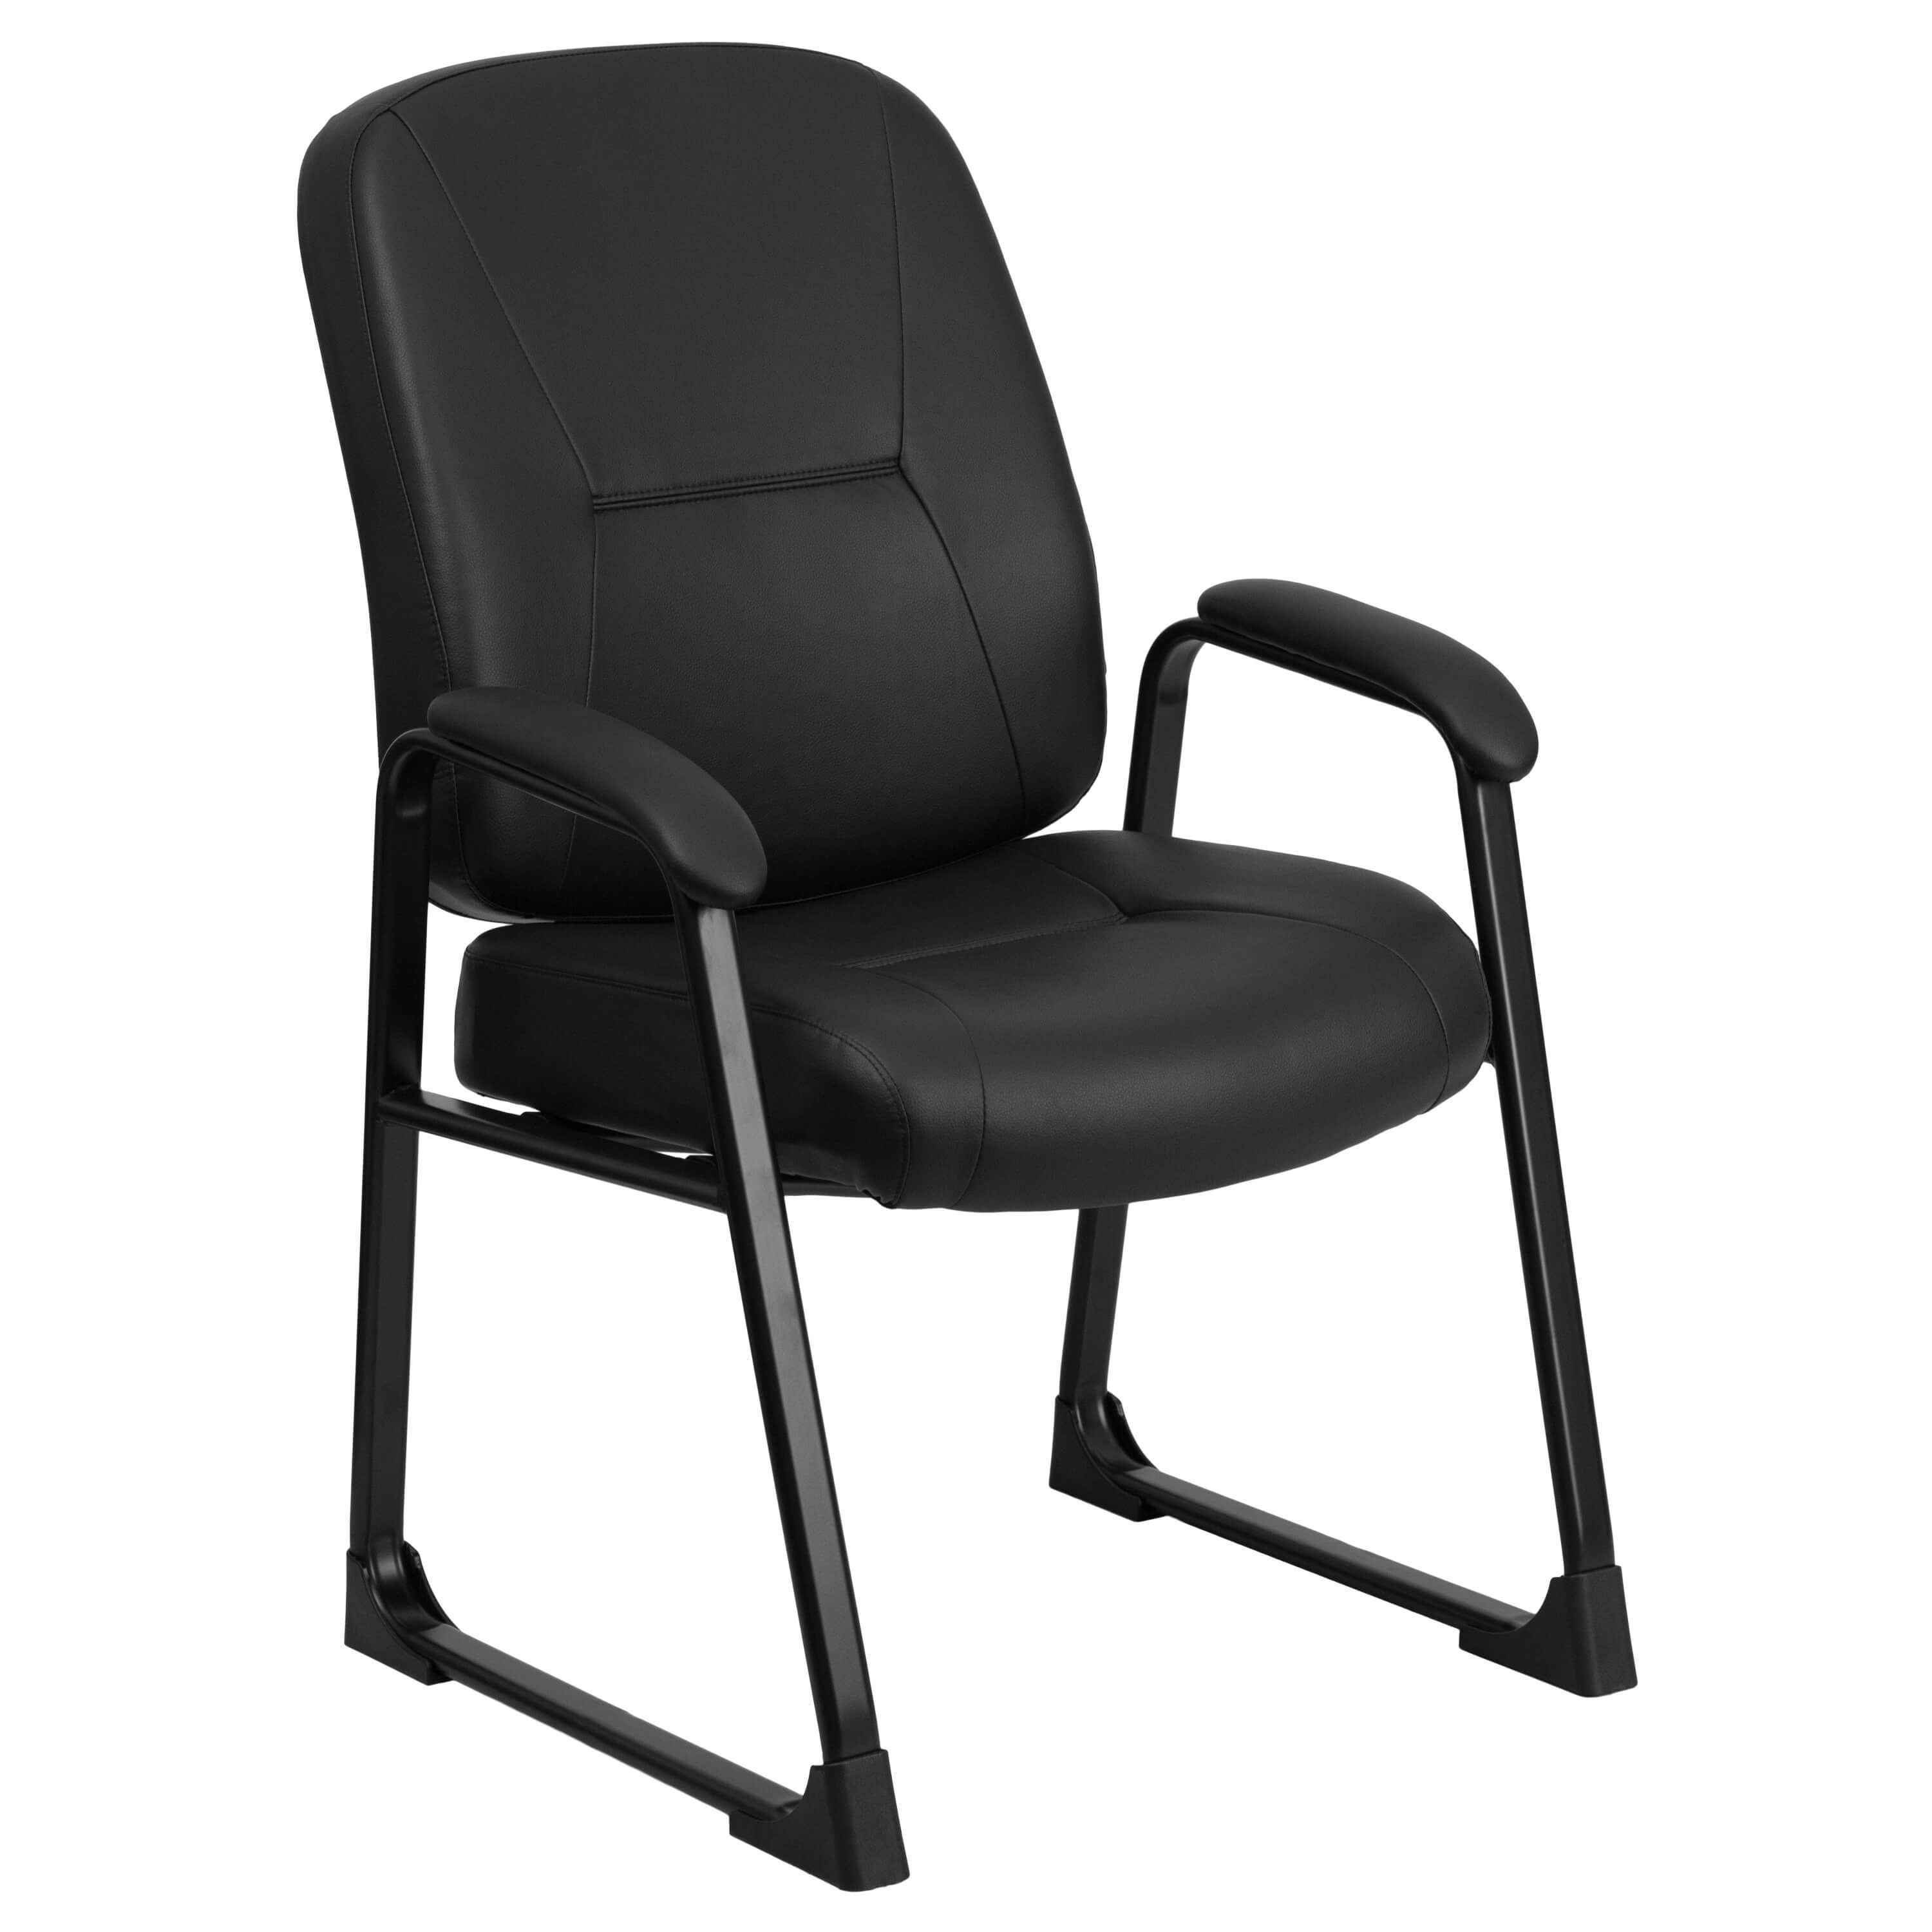 Side chairs with arms CUB WL 738AV LEA GG FLA